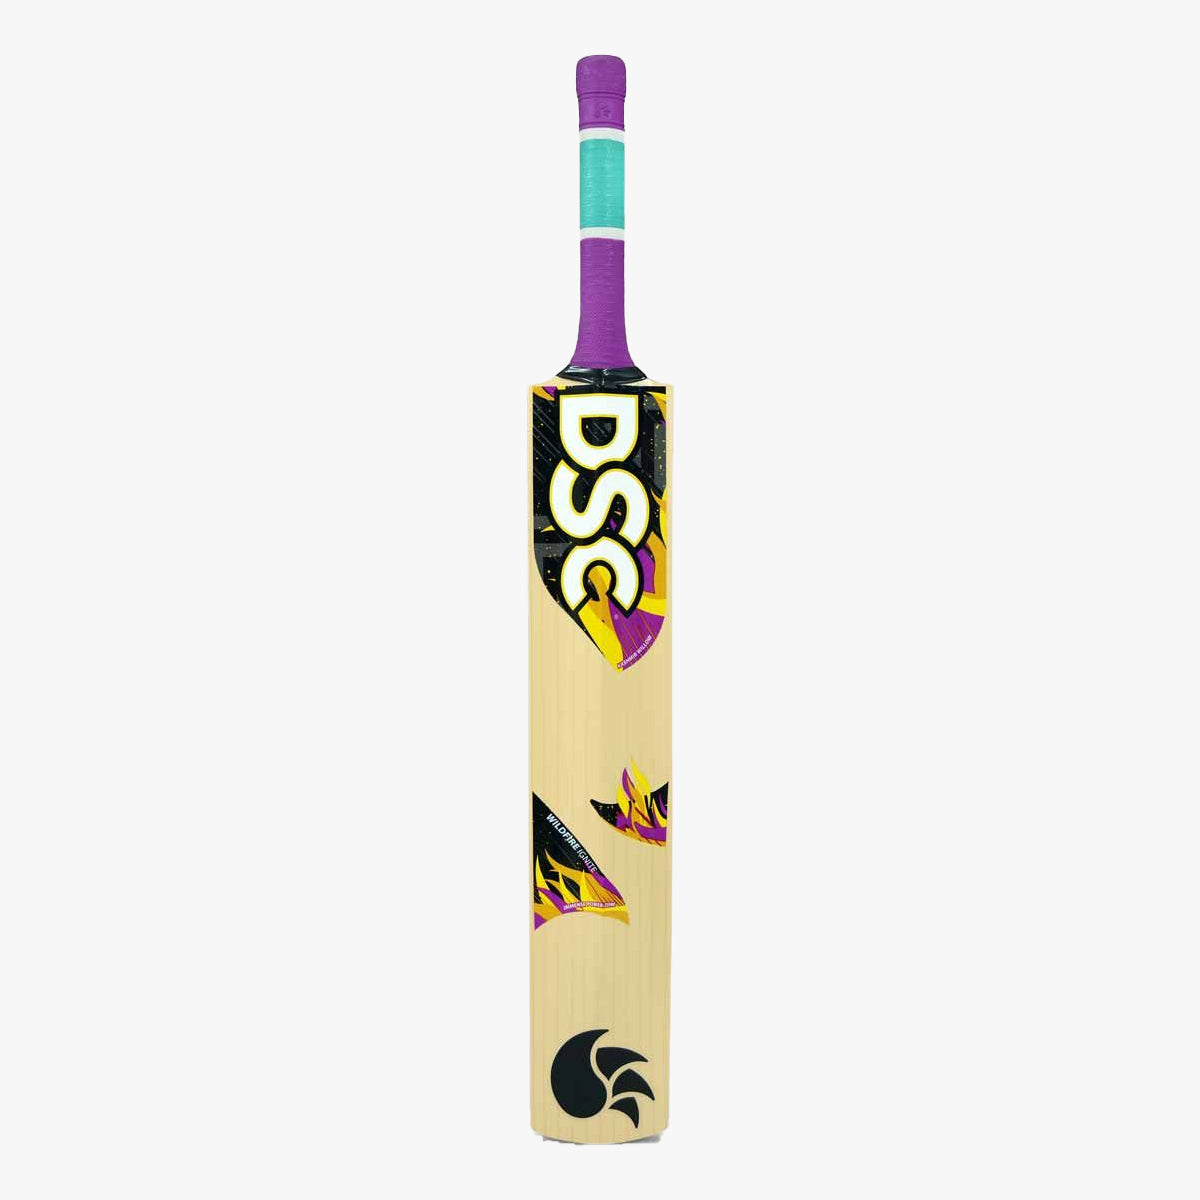 DSC Wildfire Ignite Tennis Ball Cricket Bat